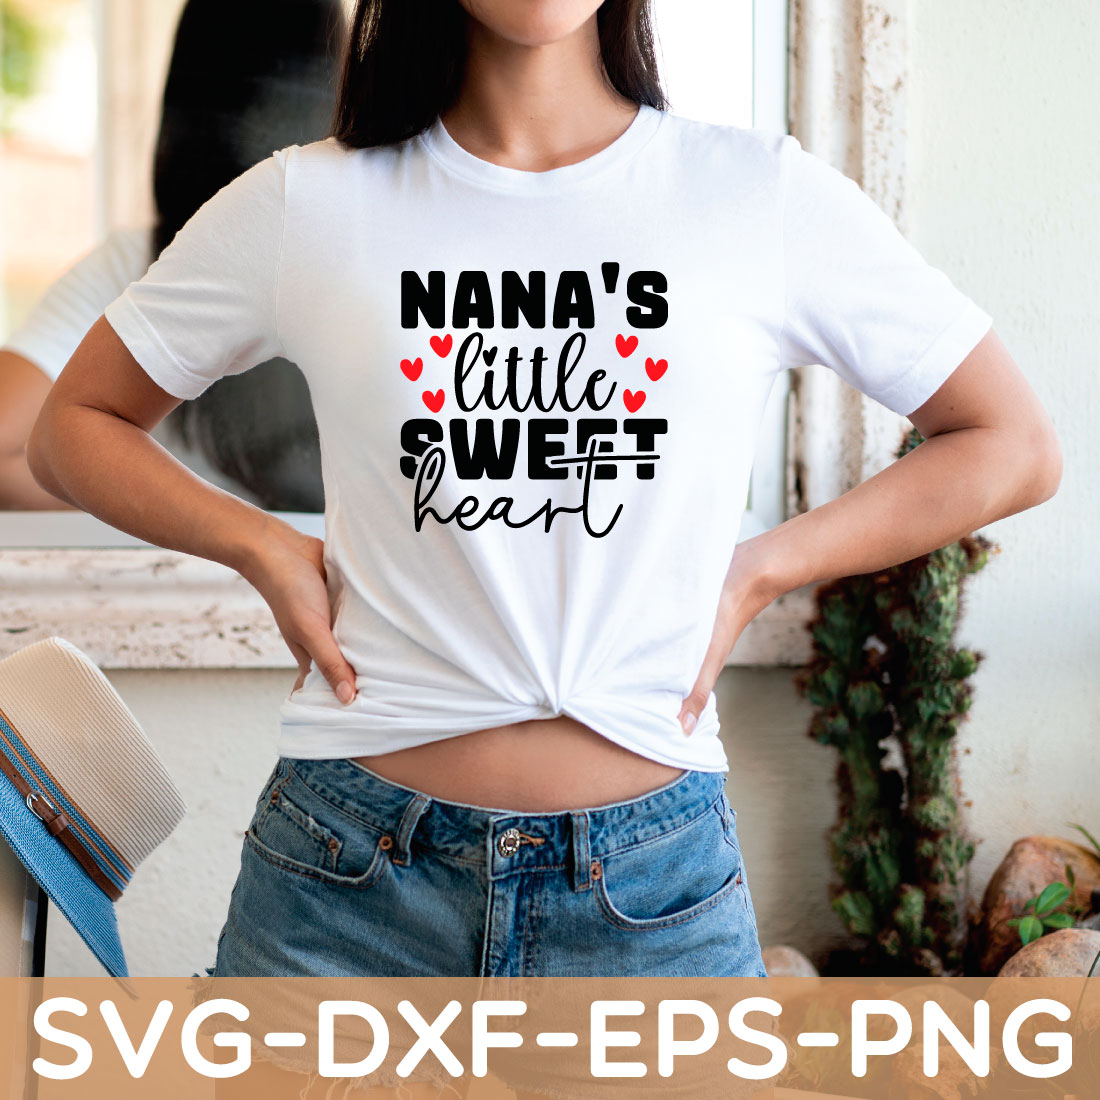 nana\'s little sweetheart shirt preview image.